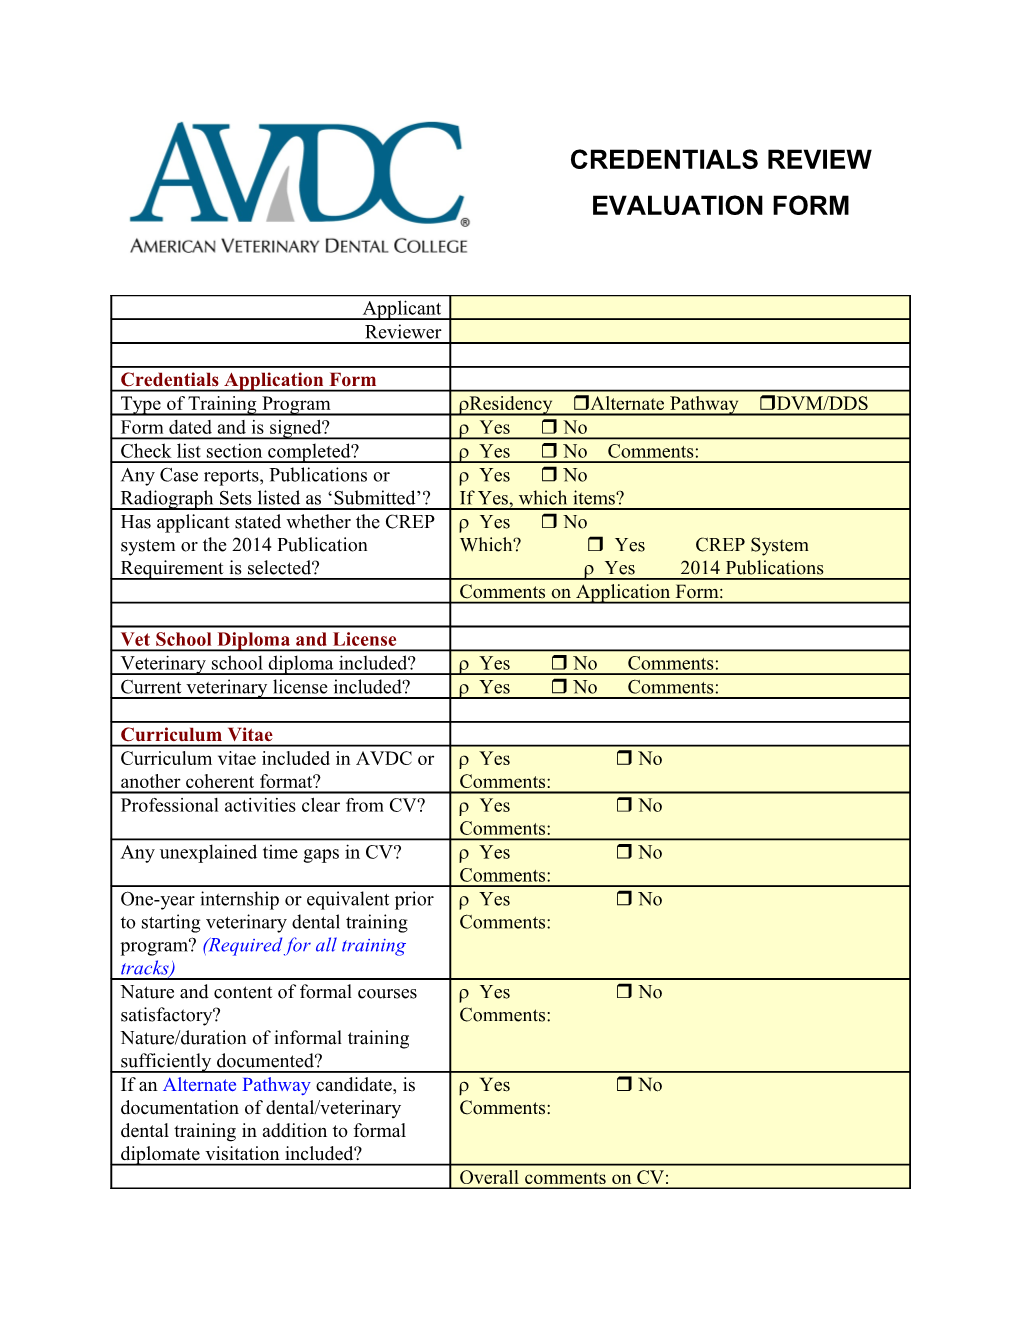 Credentials Review Evaluation Form 2007